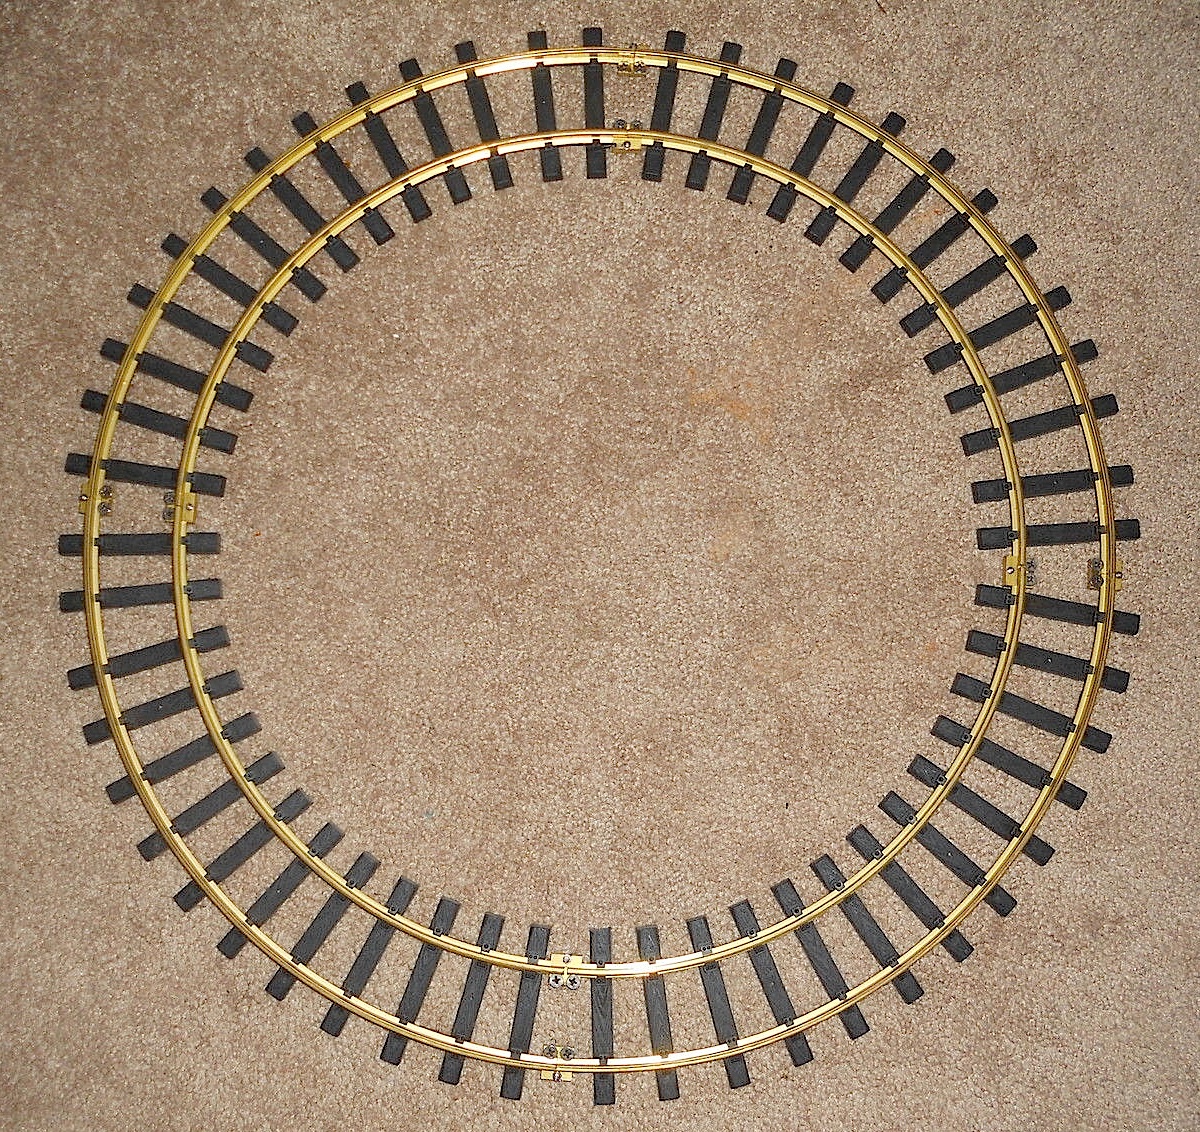 254mm Radius Minikreis (20 inch Diameter Mini Circle)